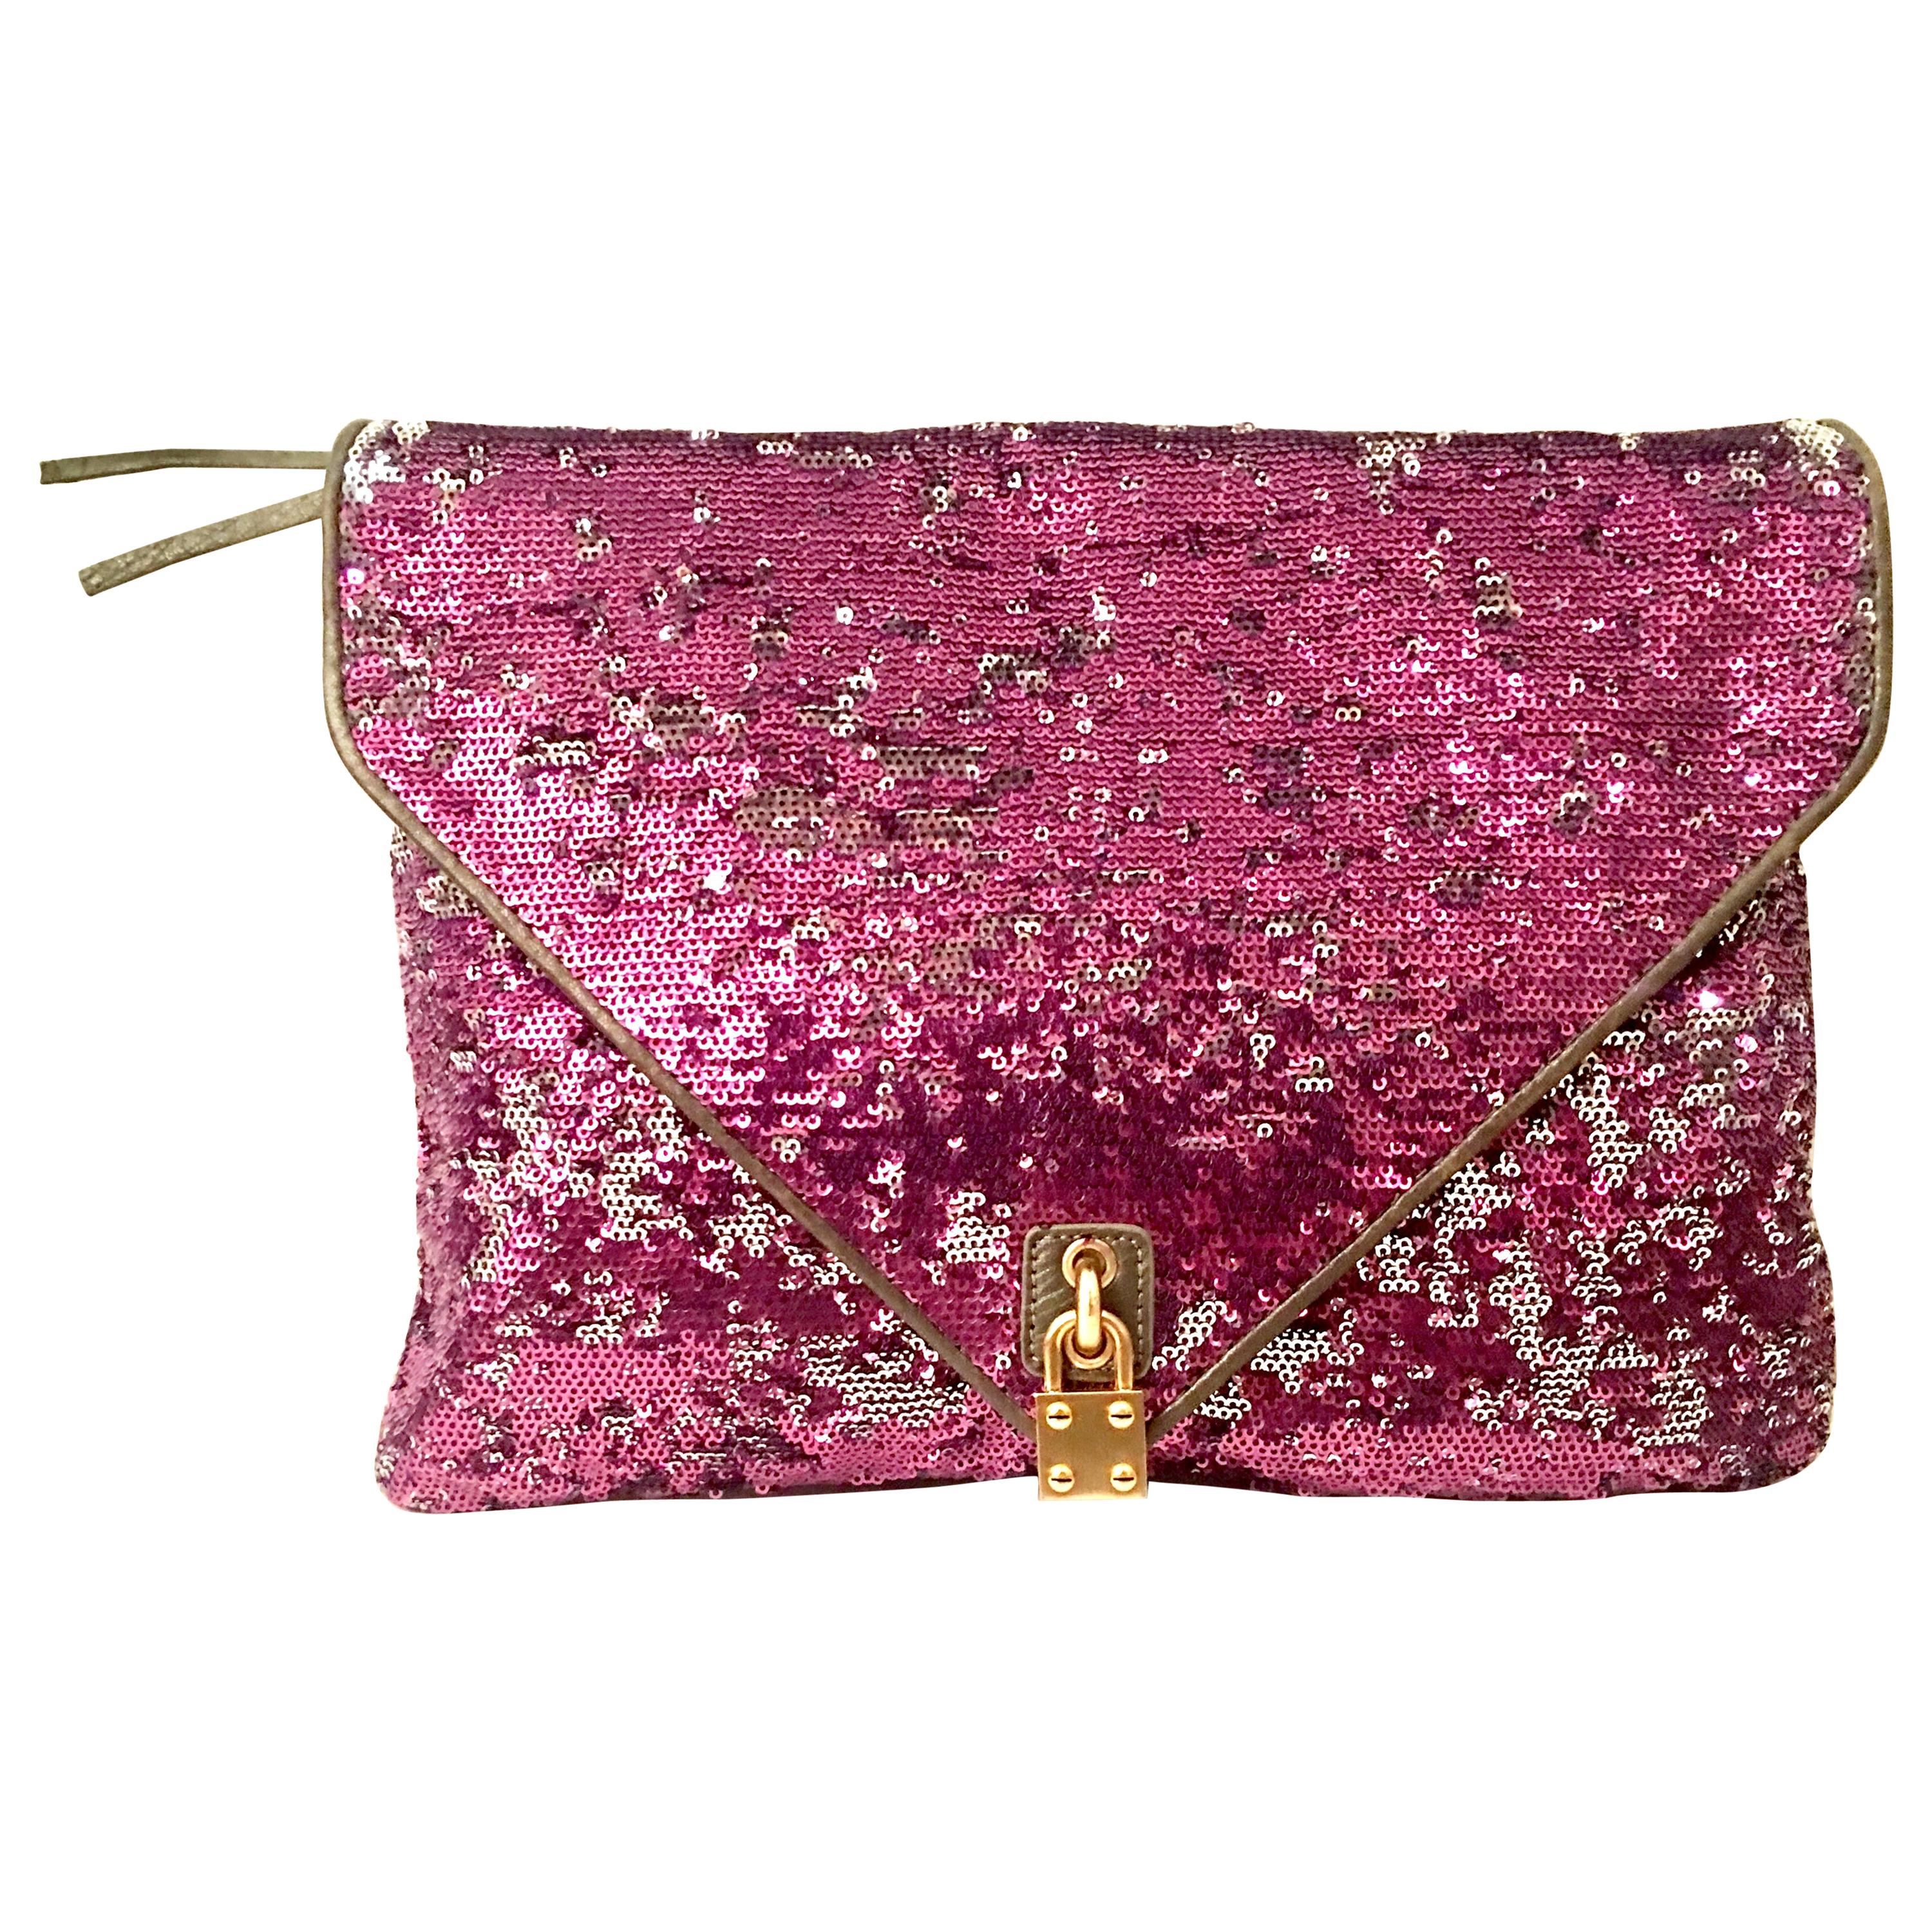 21st Century Reverse Sequin & Leather Envelope Clutch Handbag By, Alexis Hudson